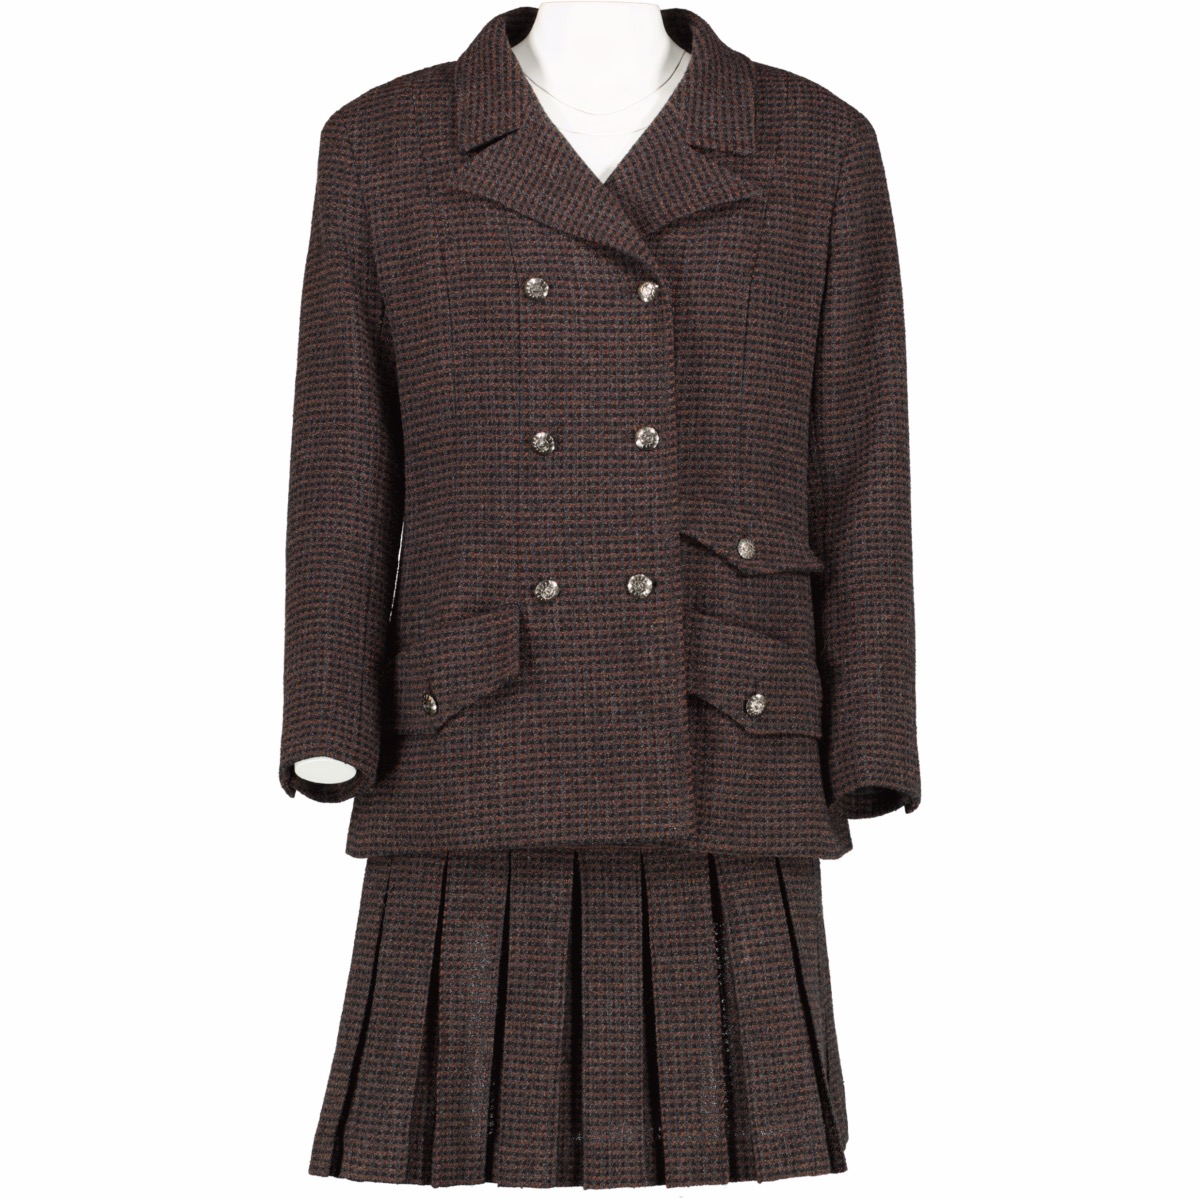 Chanel Fall 1997 Brown /Grey Wool Tweed Jacket Skirt Set - Size